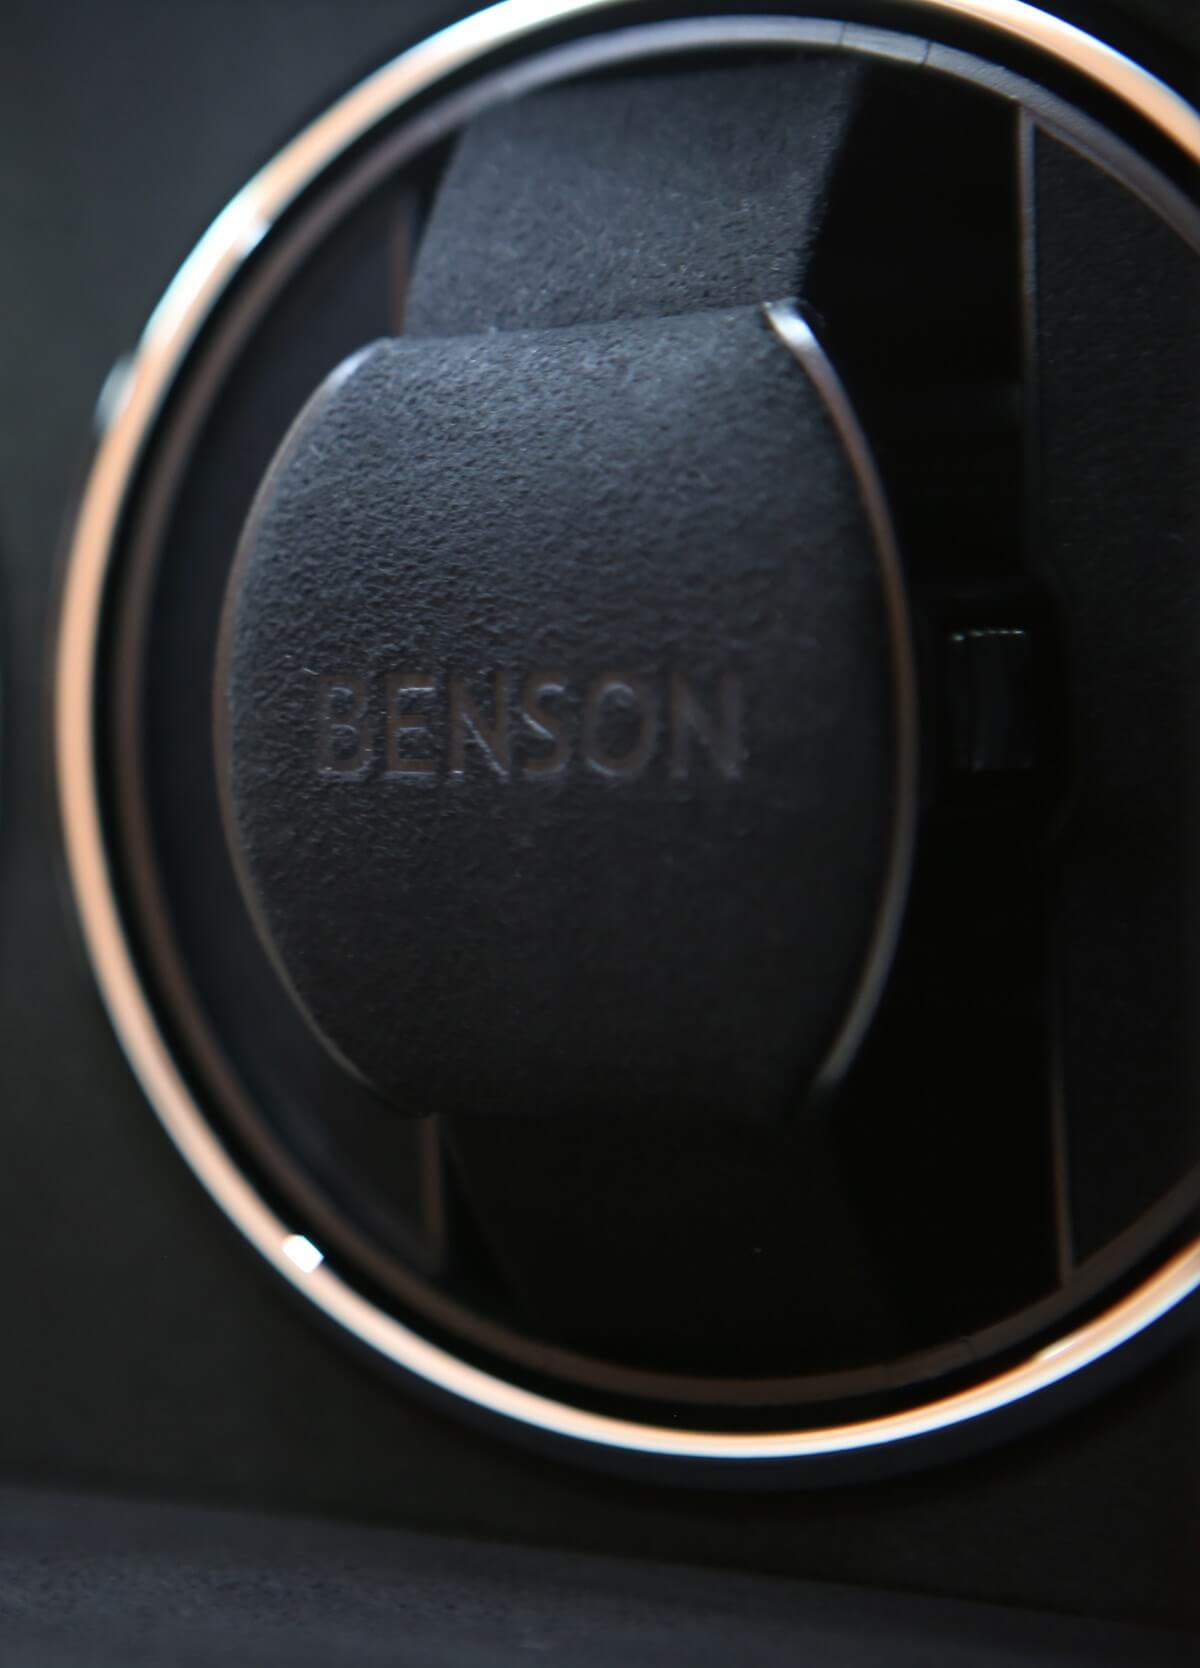 Benson Demo Swiss Series 1.20 Black Leather demo